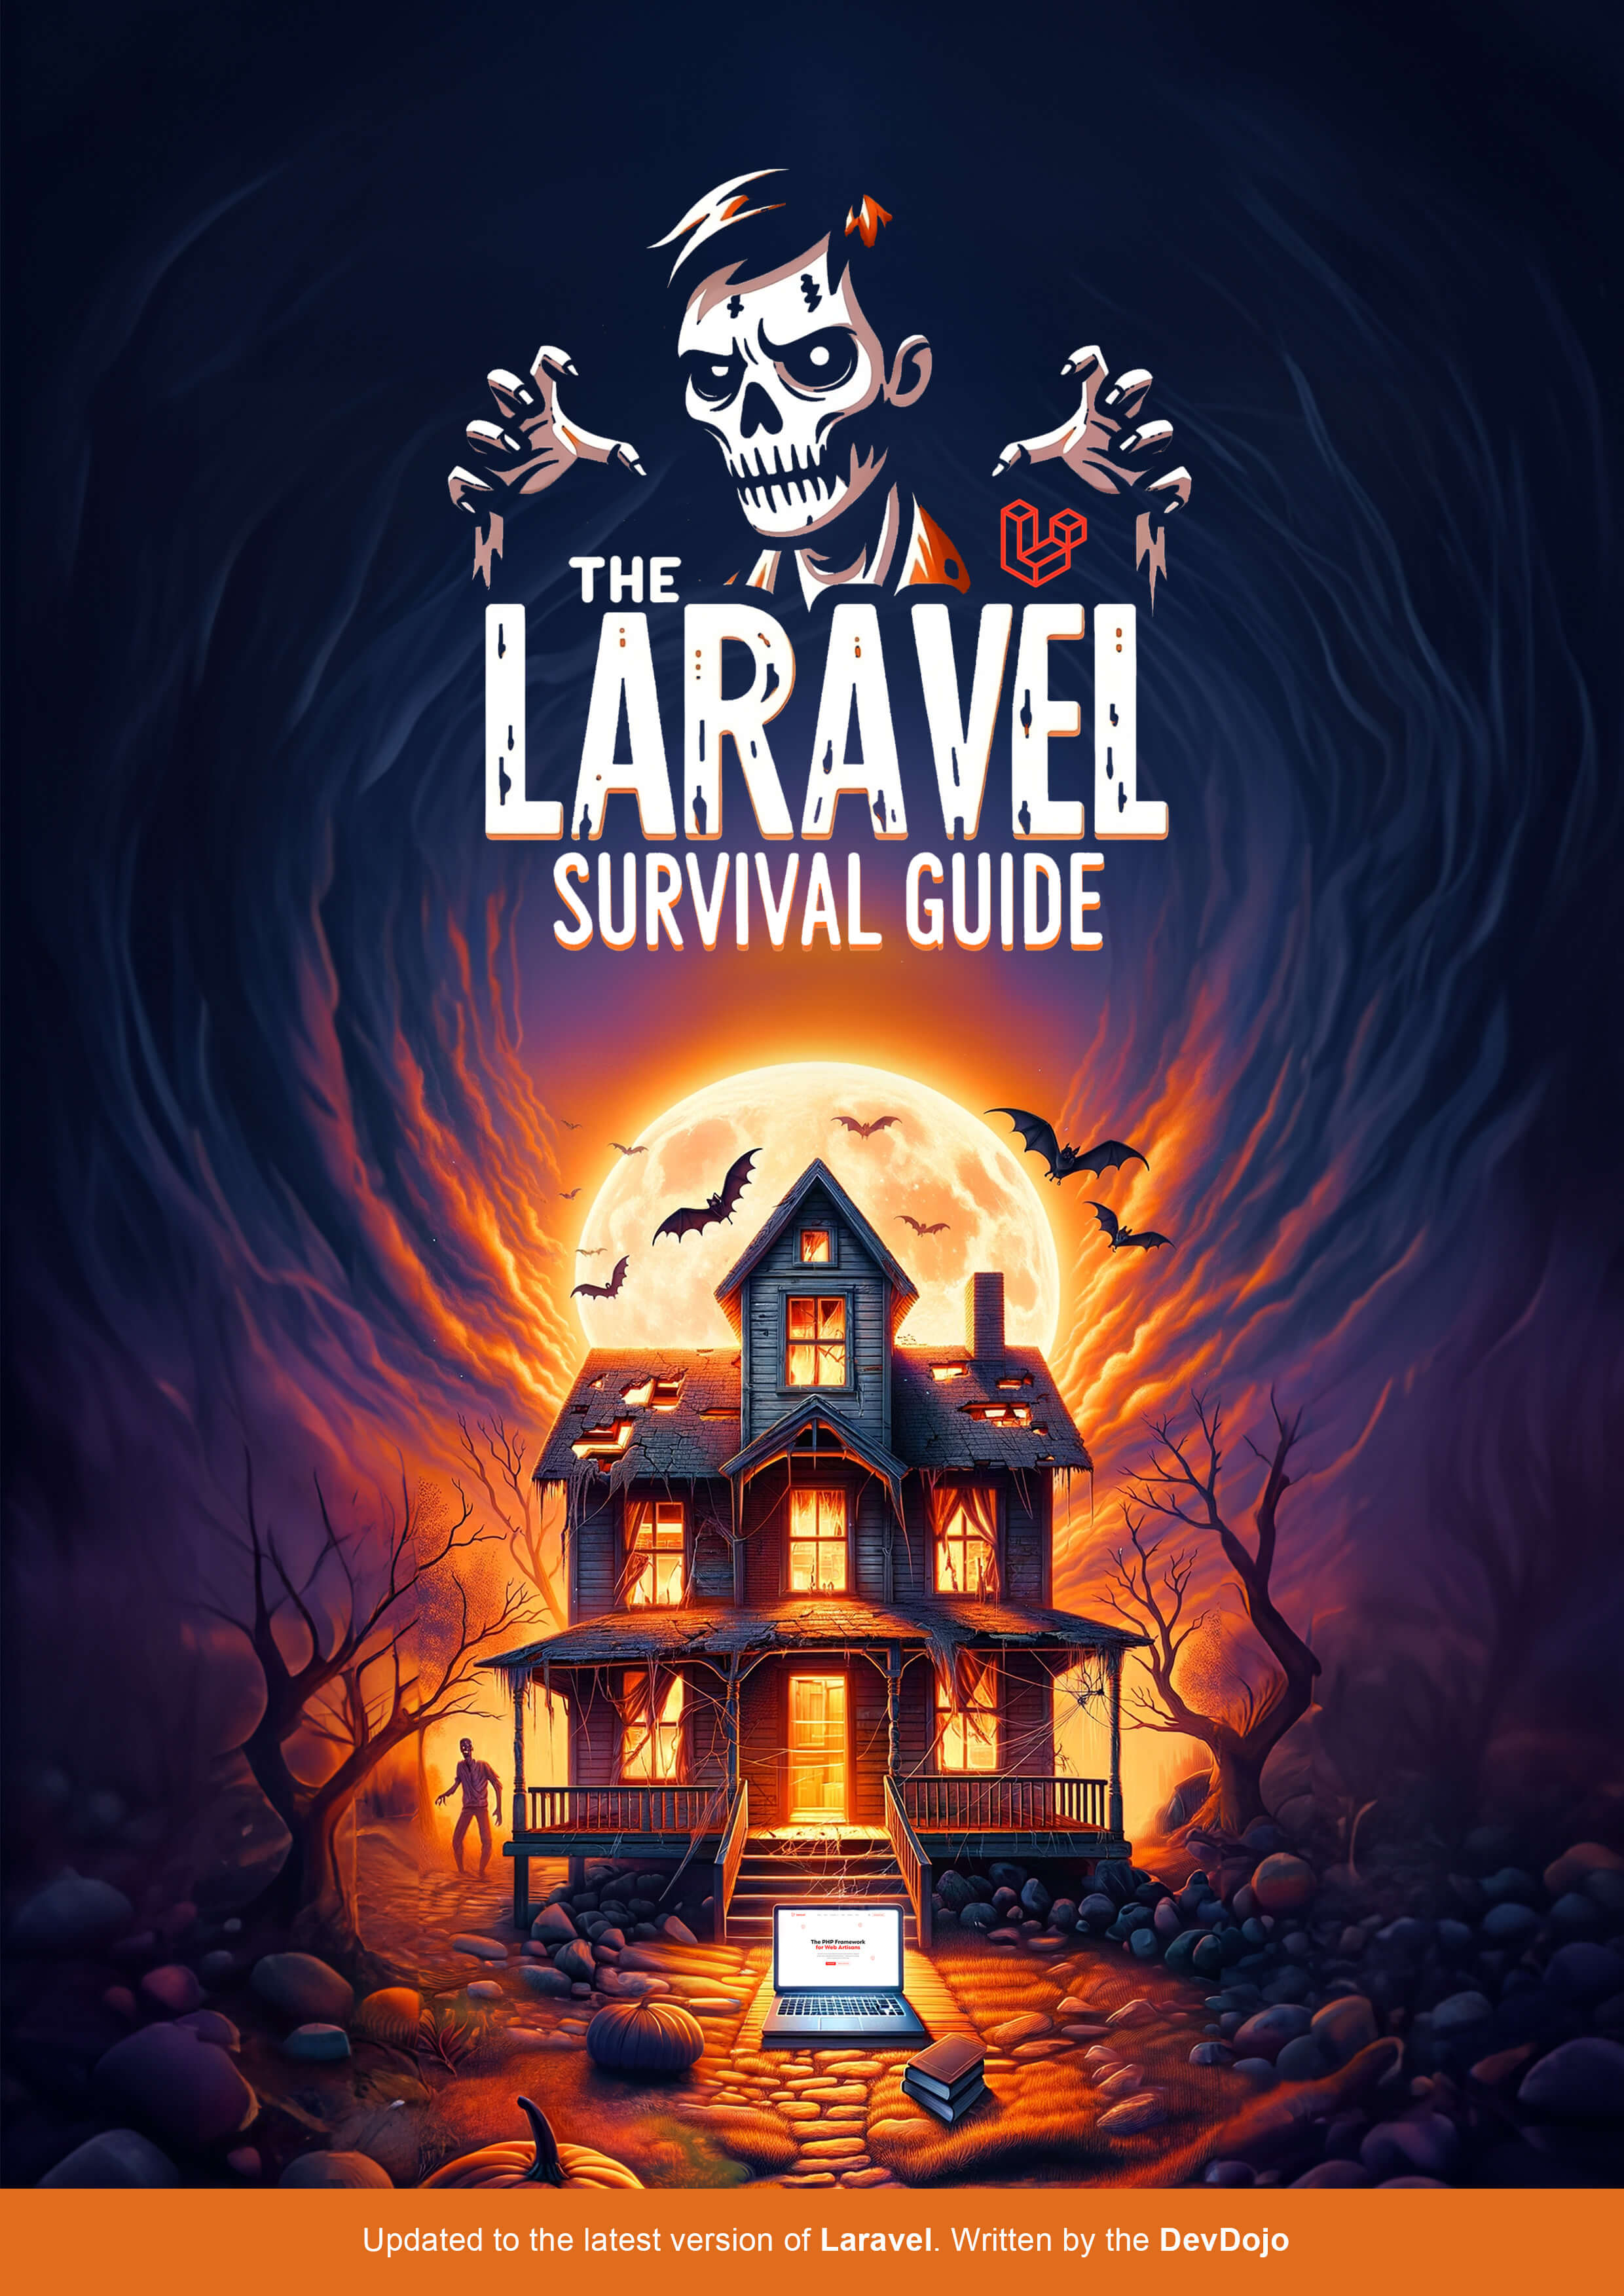 The Laravel Survival Guide